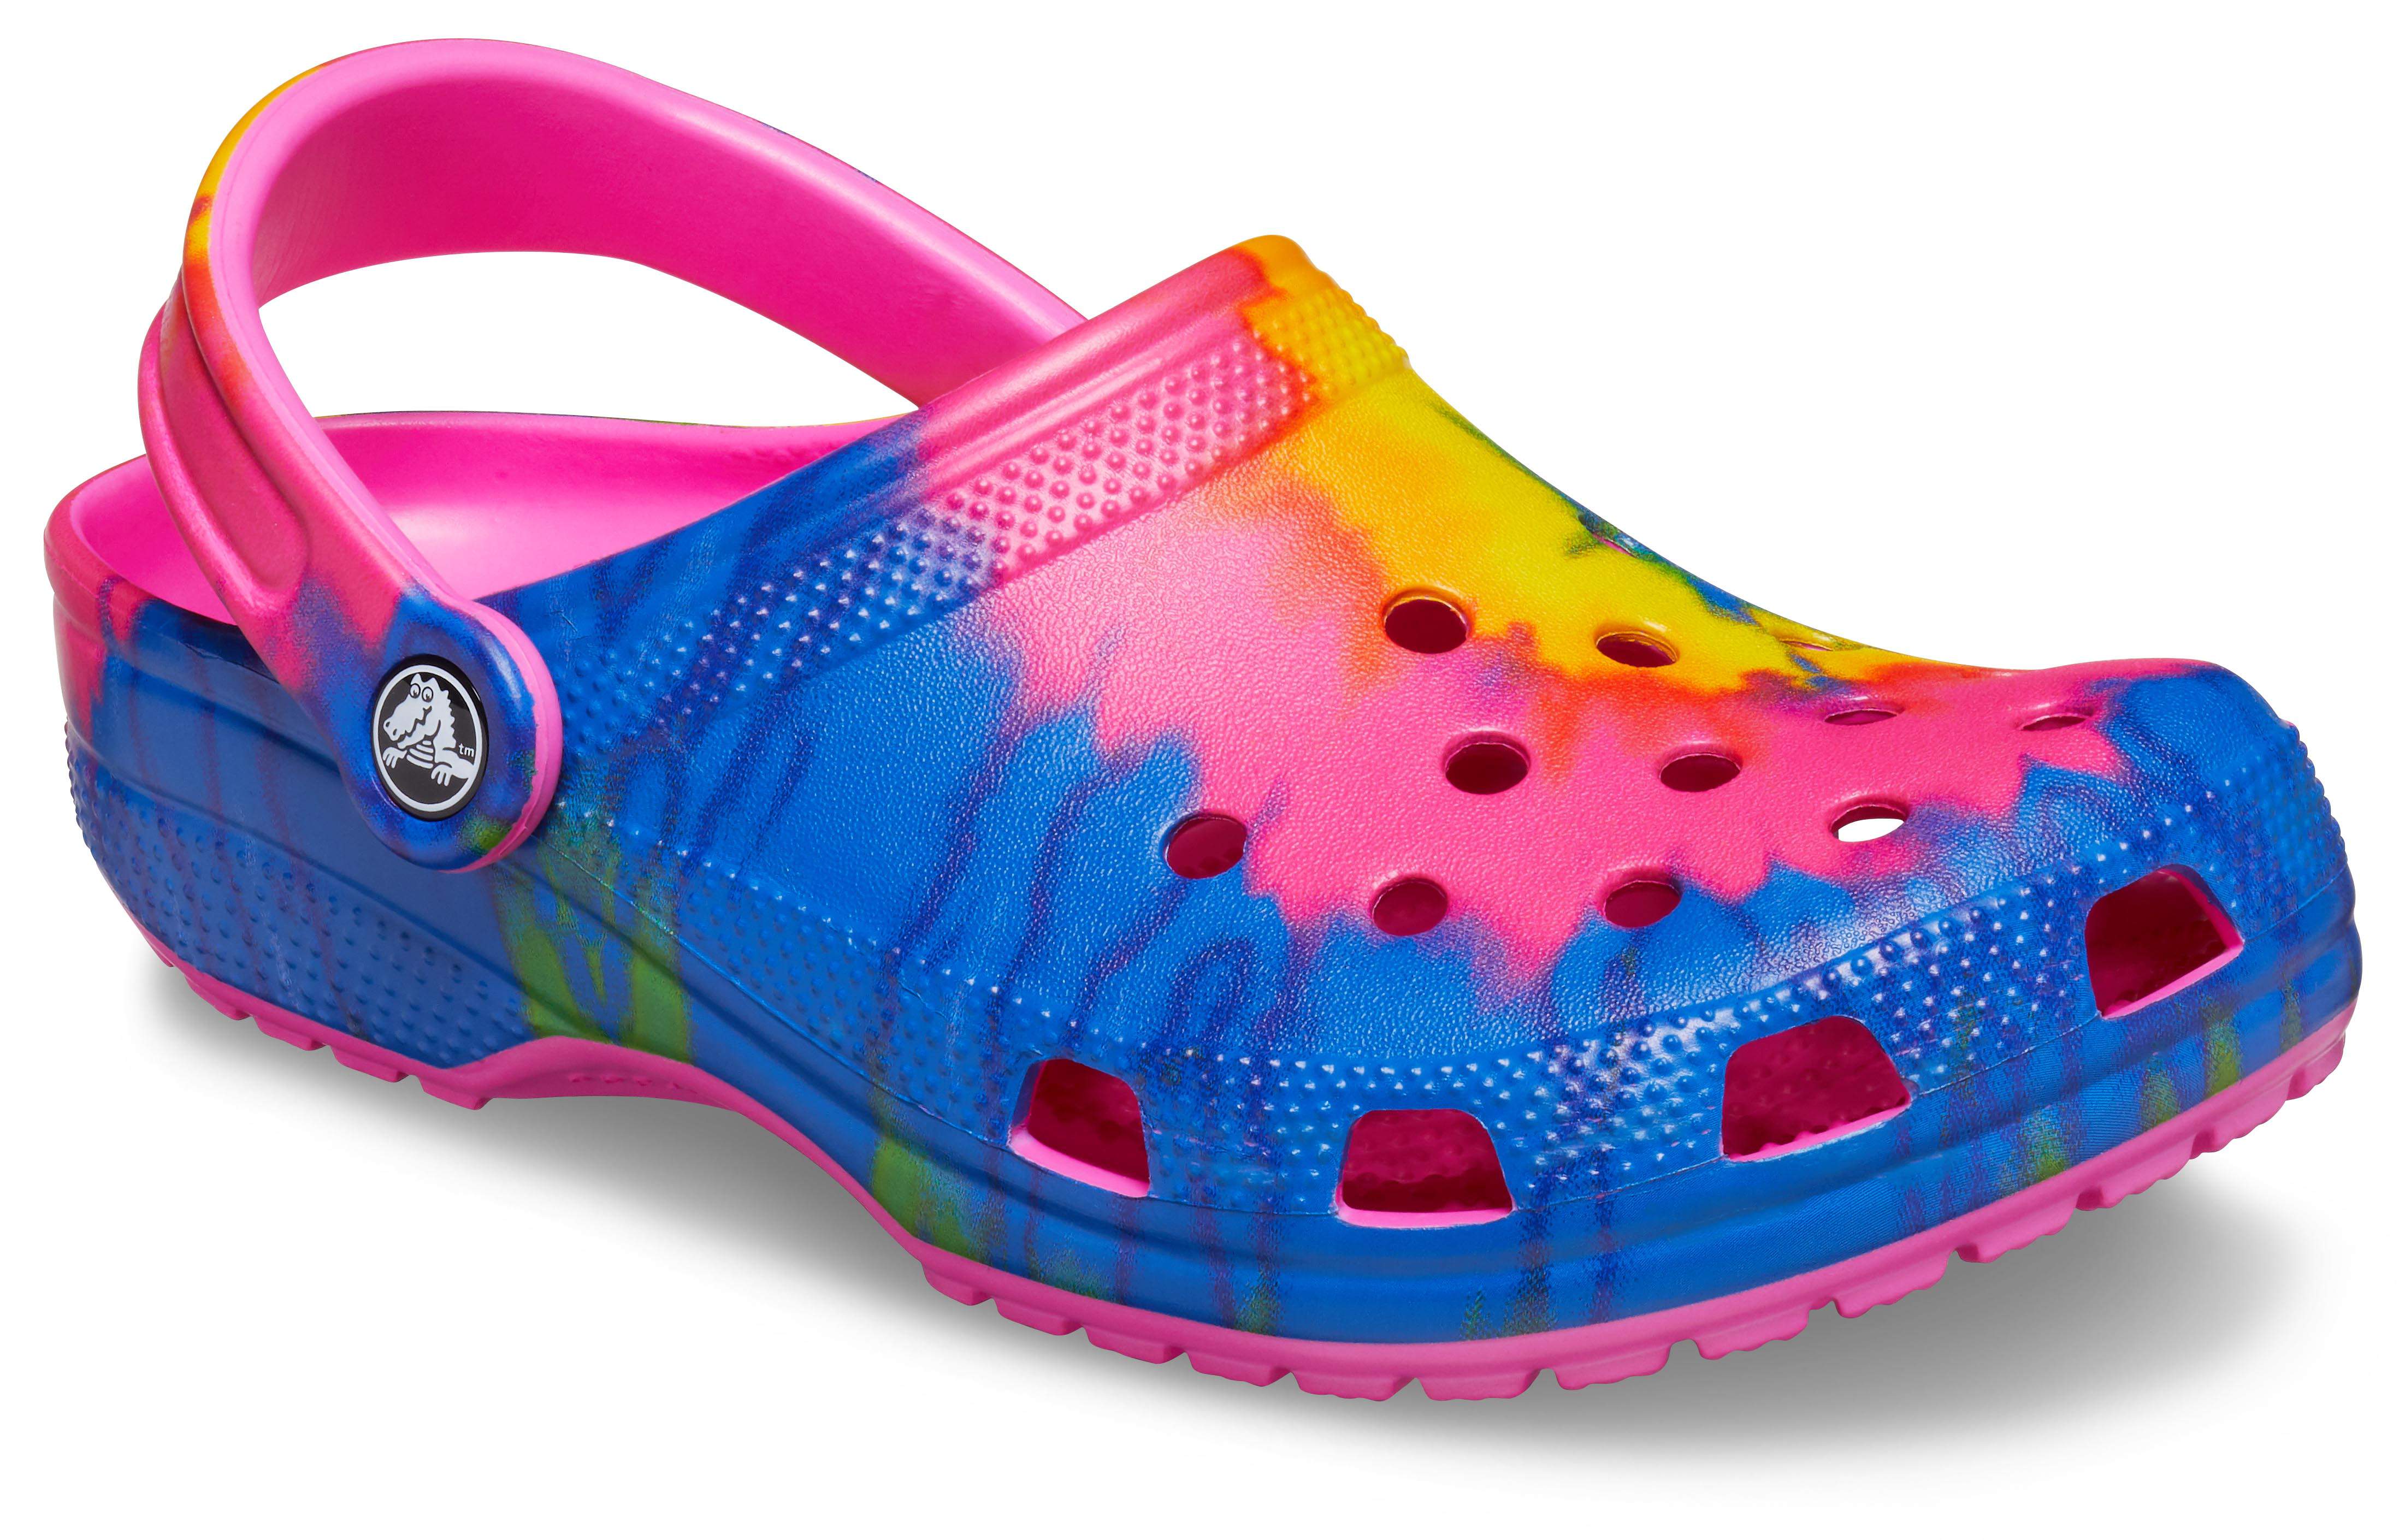 rainbow crocs with fur inside